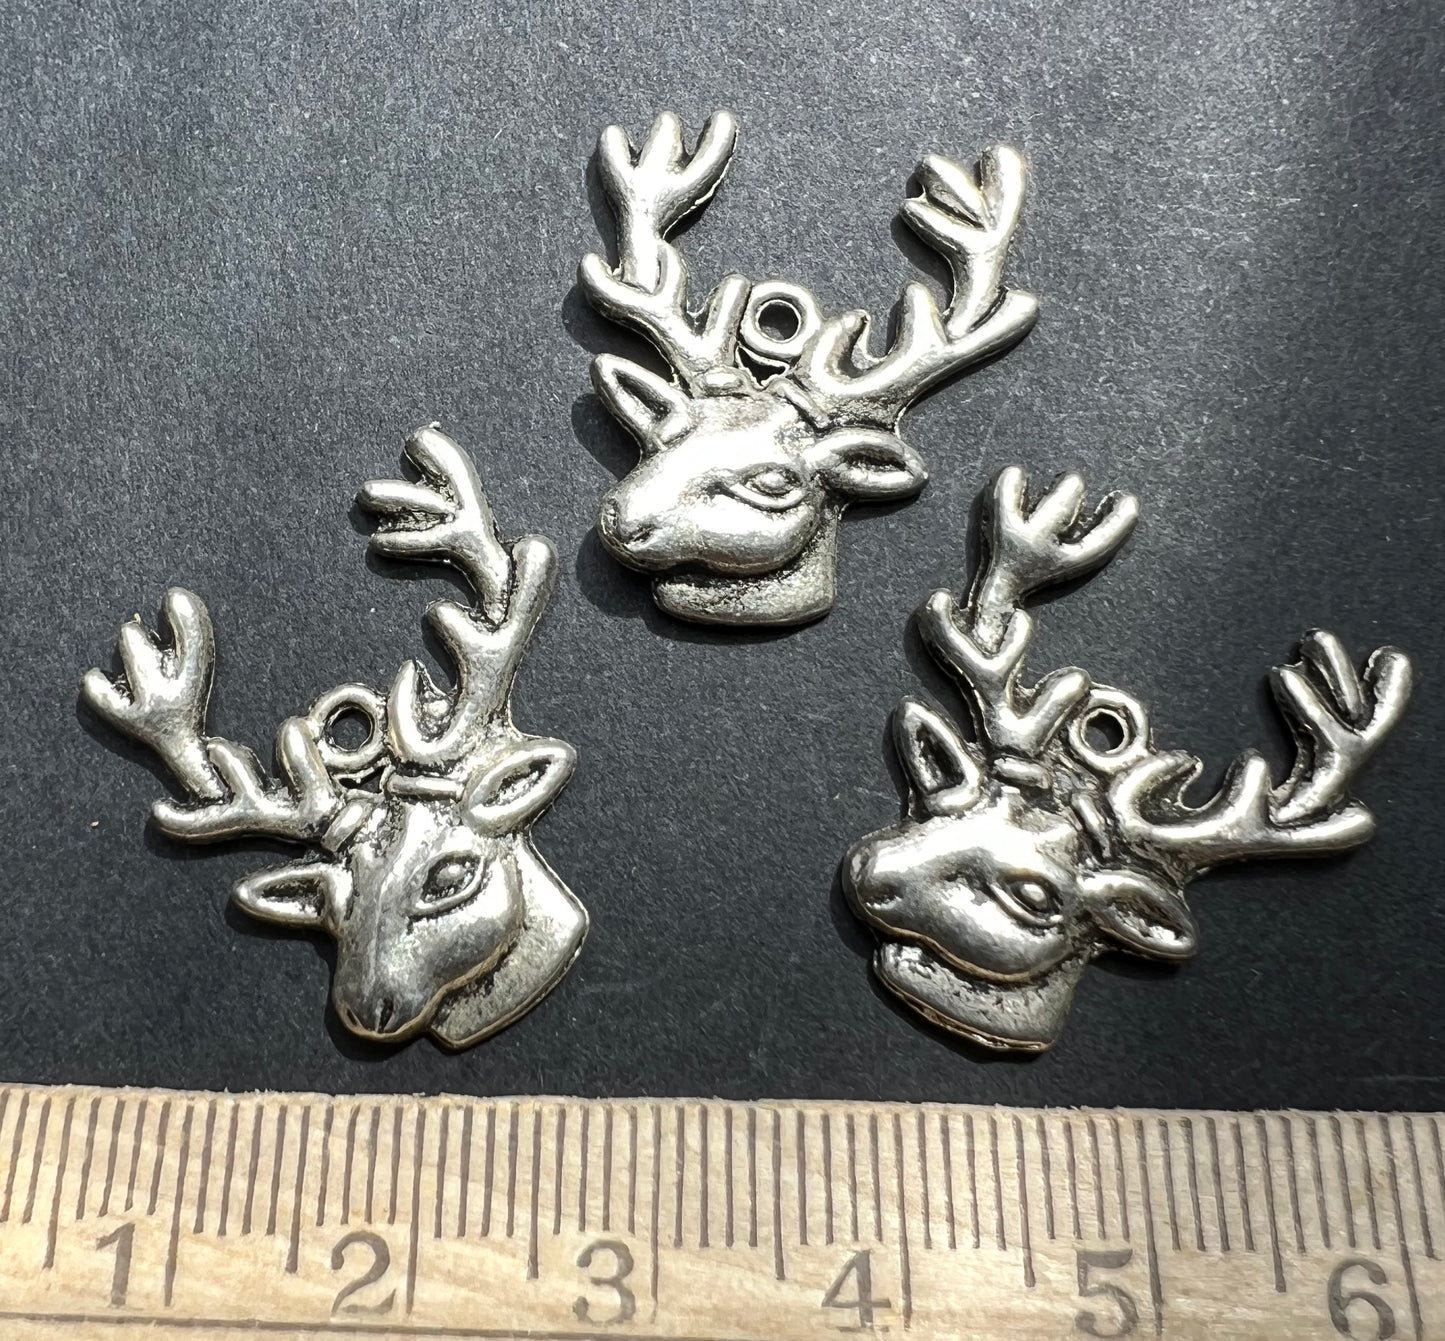 3 Reindeer Charms - 2.5cm tall..